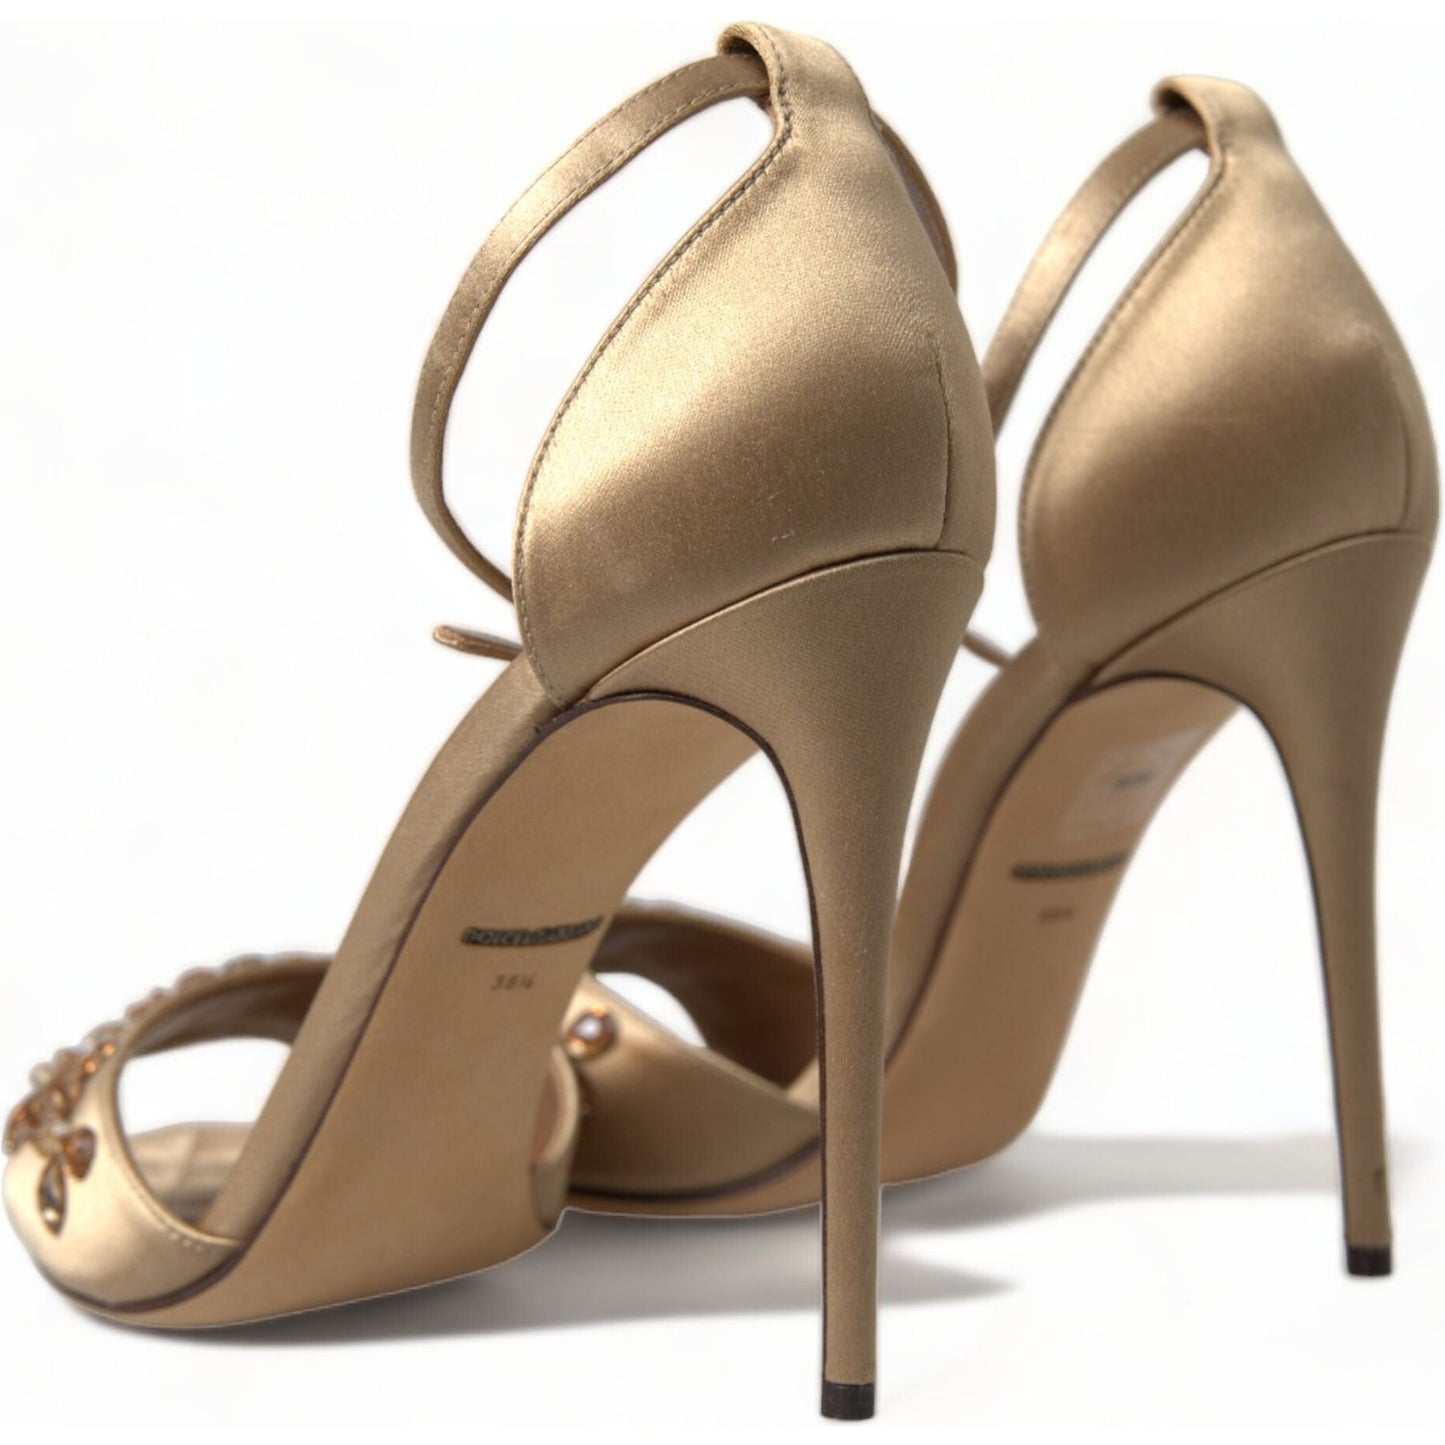 Dolce & Gabbana Crystal Embellished Heel Sandals gold-satin-ankle-strap-crystal-sandals-shoes 465A9643-bg-scaled-1b888e20-a1f.jpg